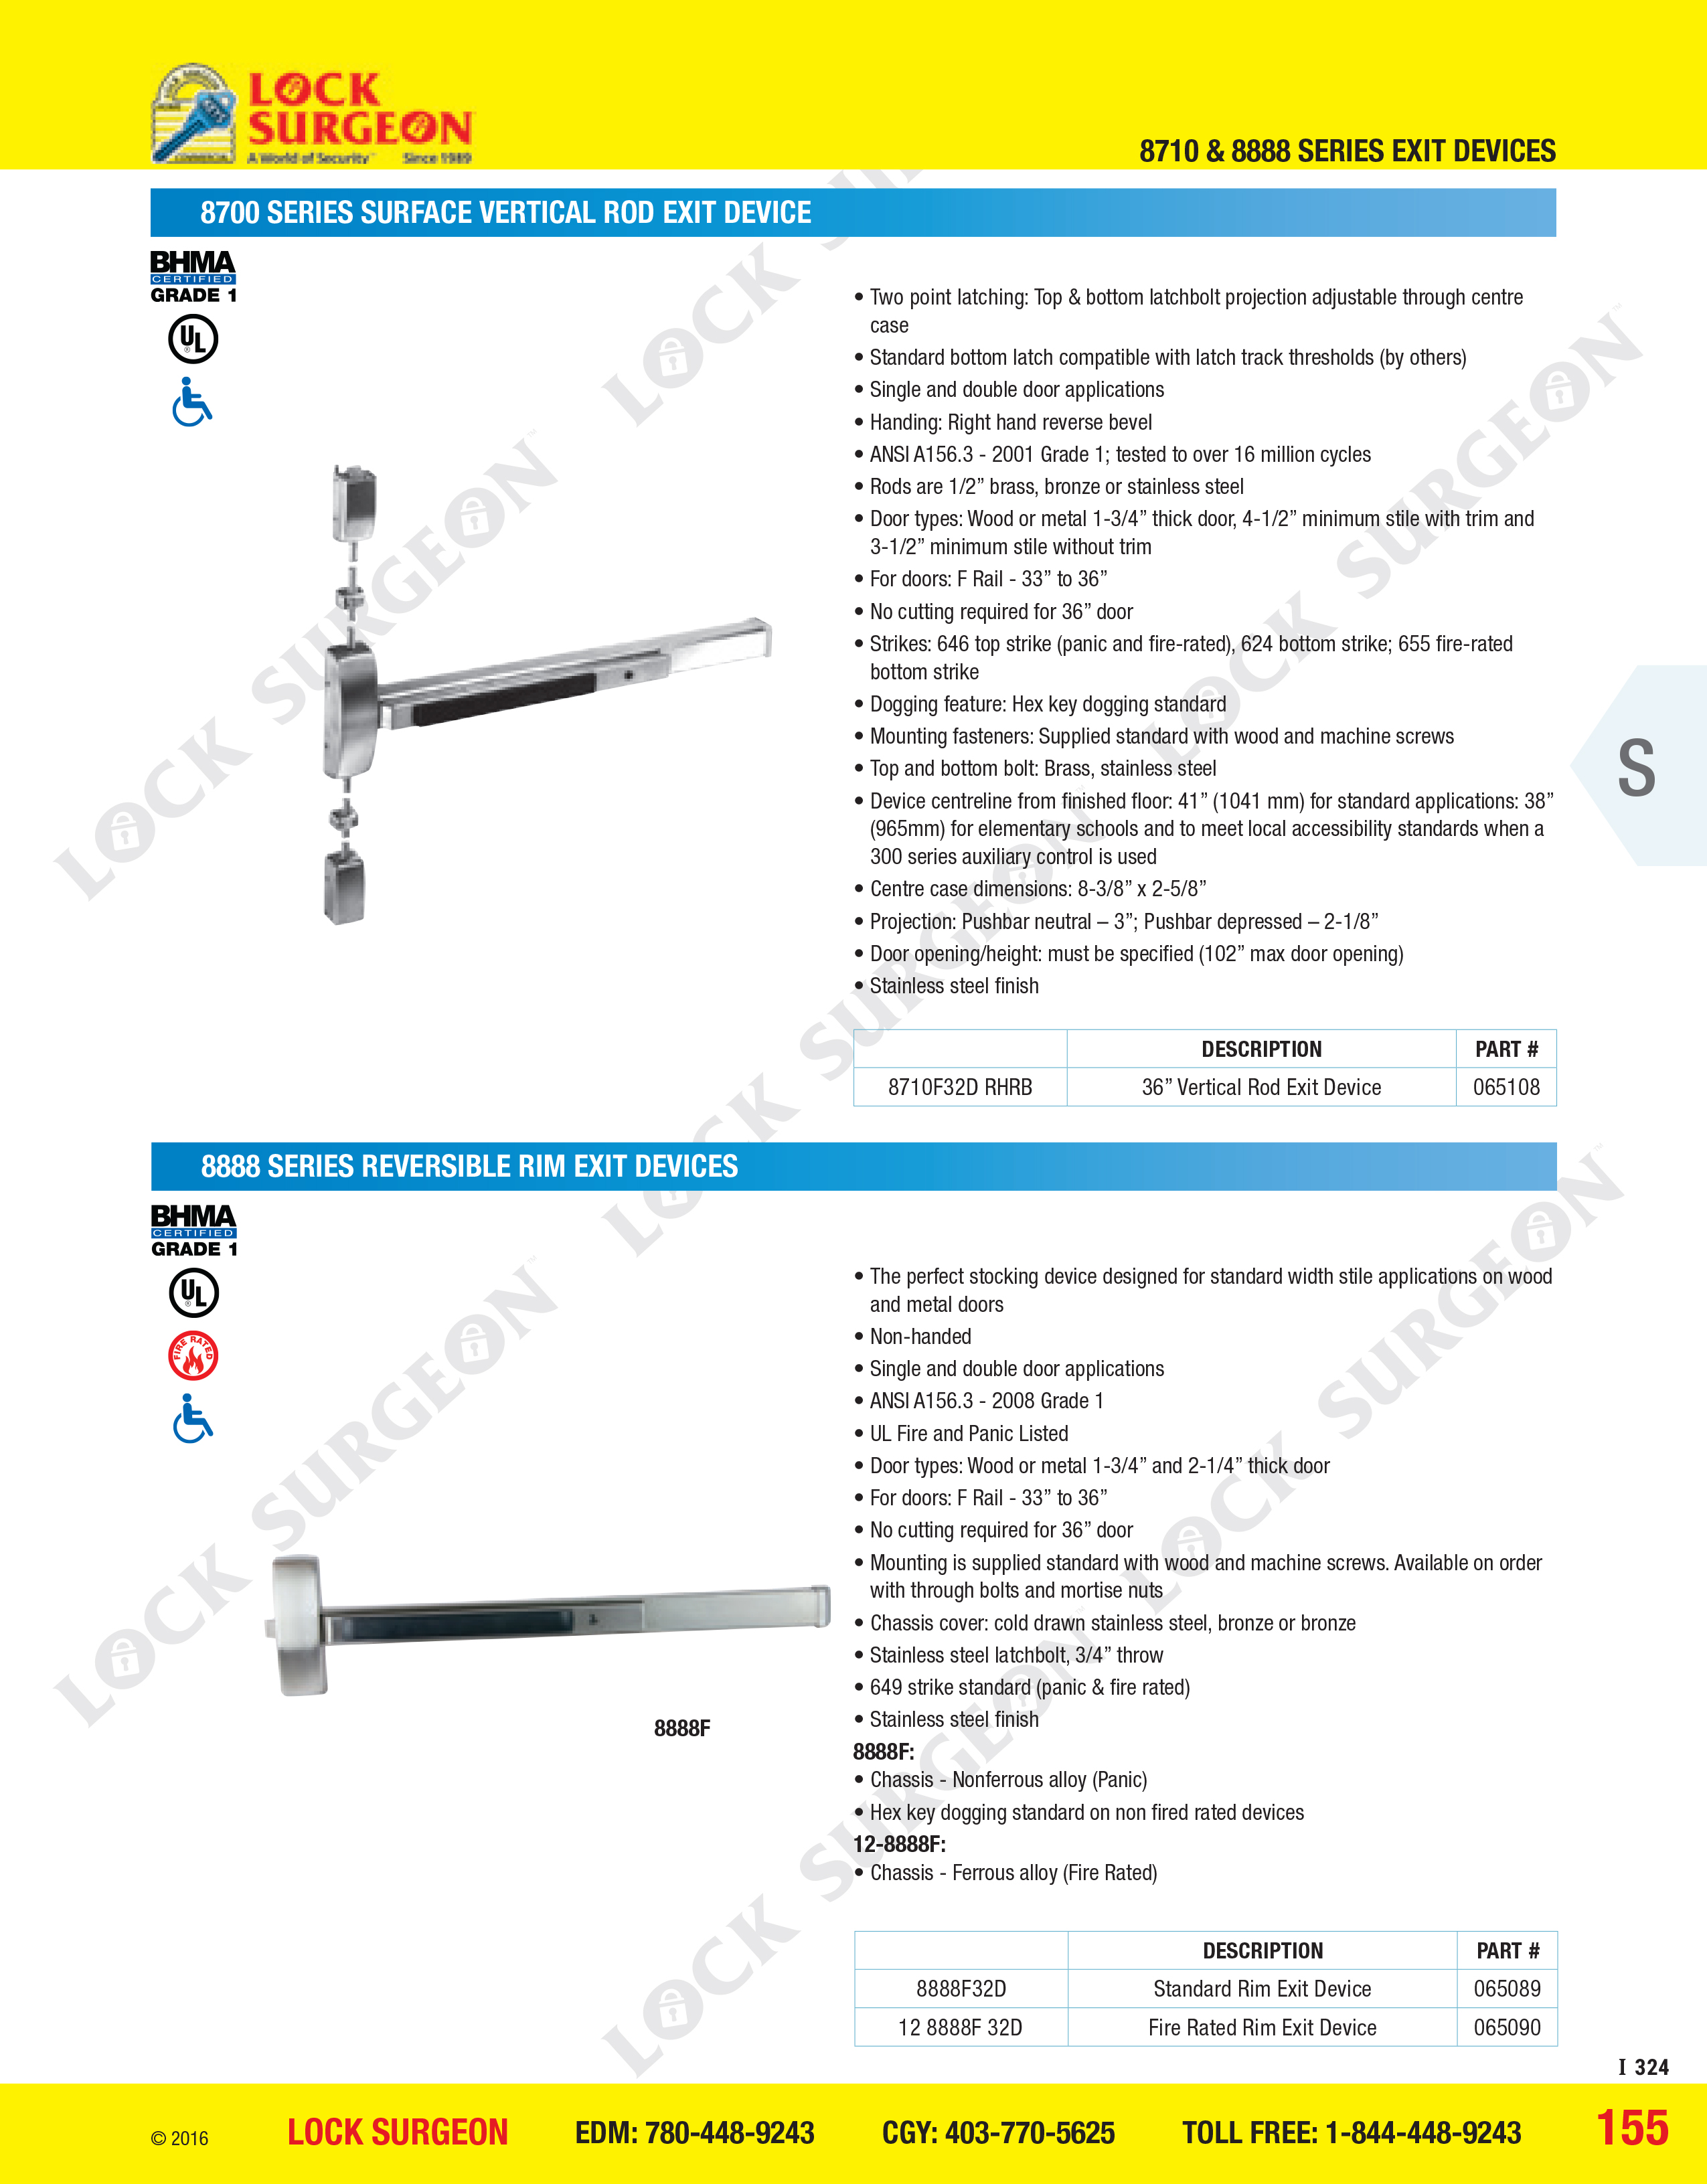 Lock Surgeon Sargent 8700 Surface Vertical Rod Exit Device & 8888 Series Reversible Rim-exit Device